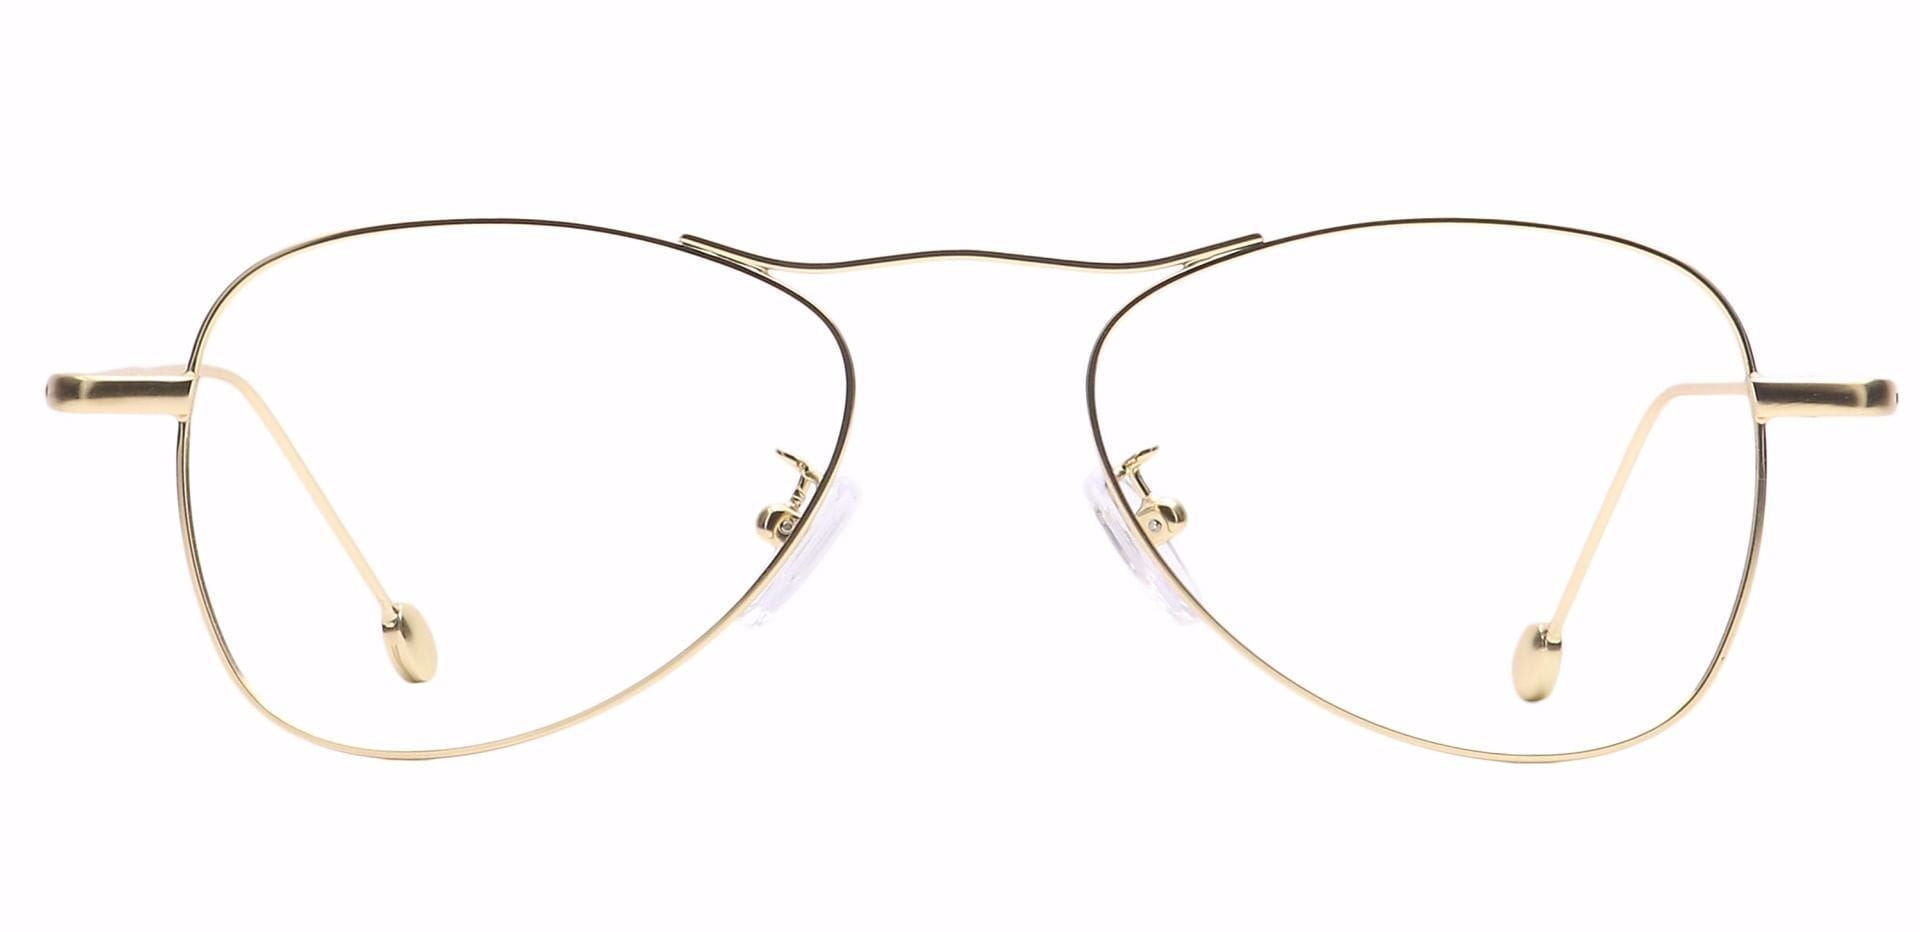 Brio Aviator Lined Bifocal Glasses - Gold